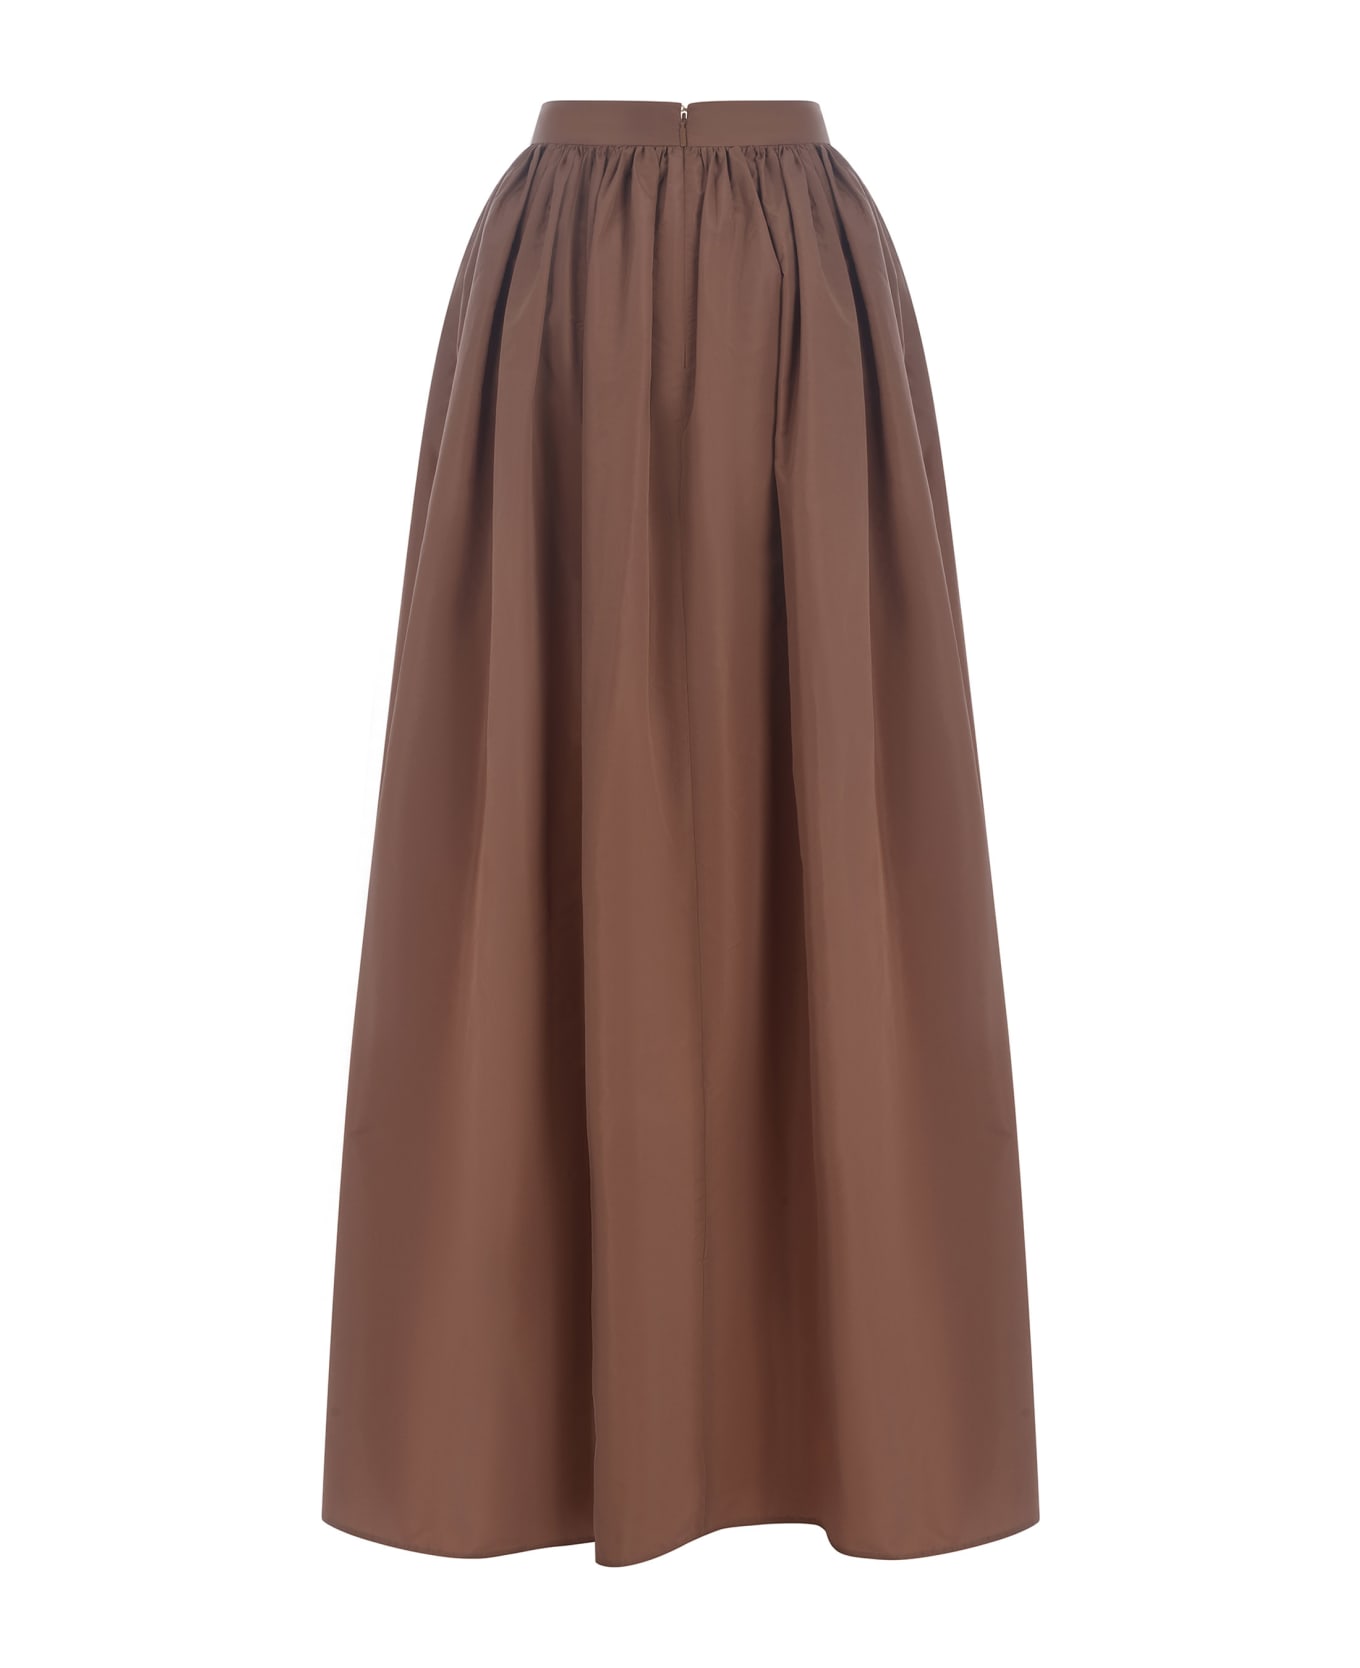 Pinko Long Skirt Made Of Taffeta - Marrone Fard Rosiccio スカート